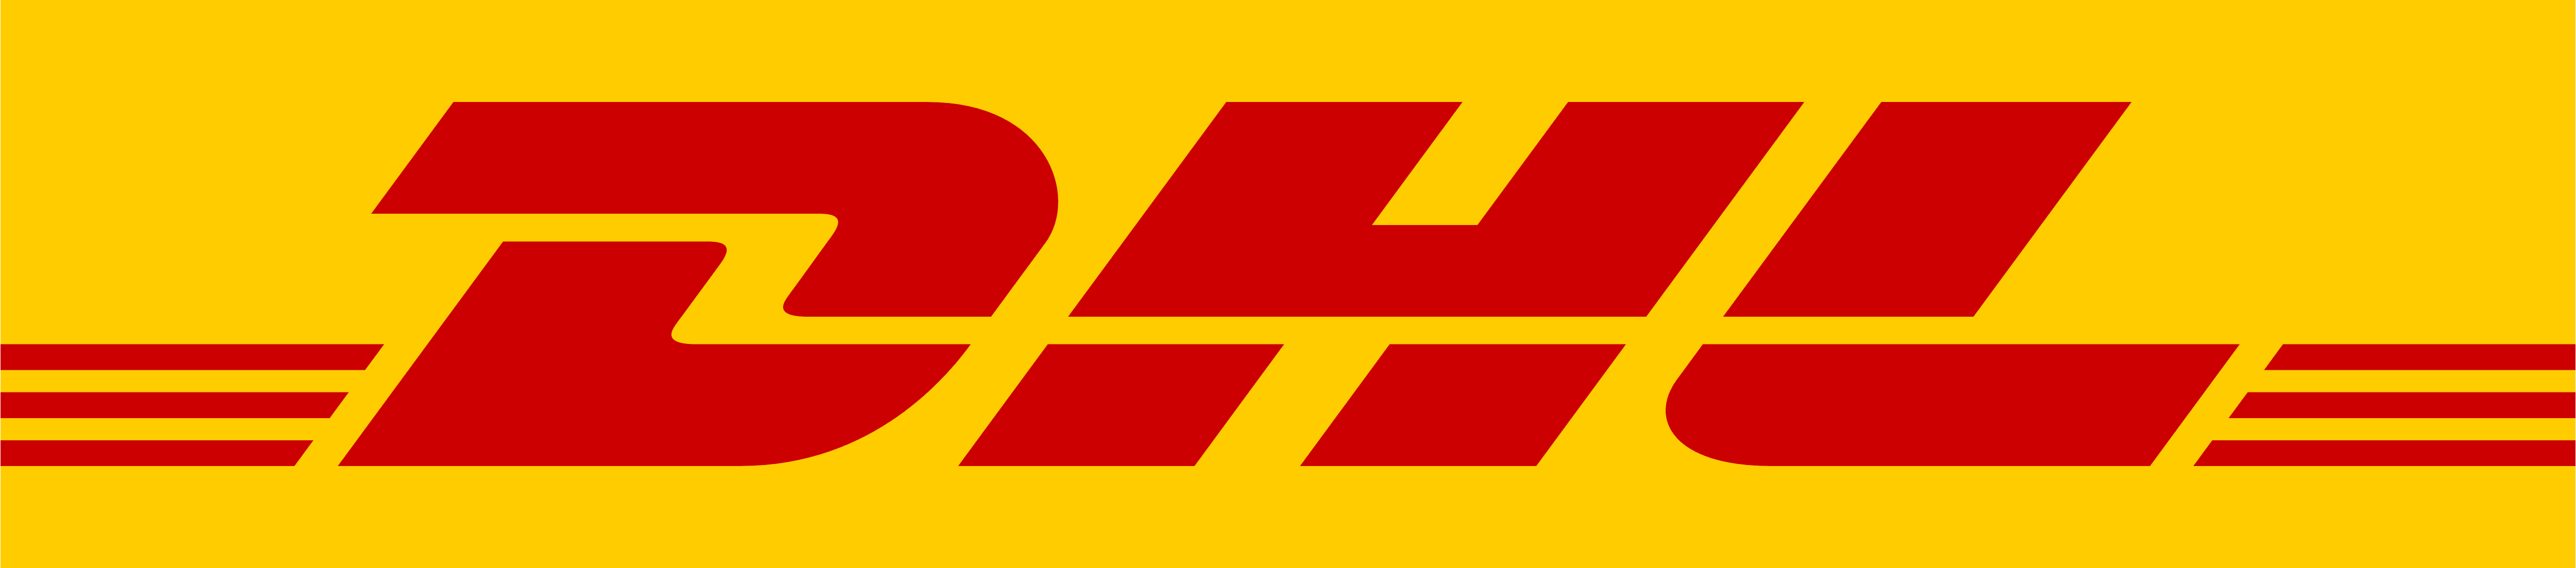 DHL New Logo - DHL